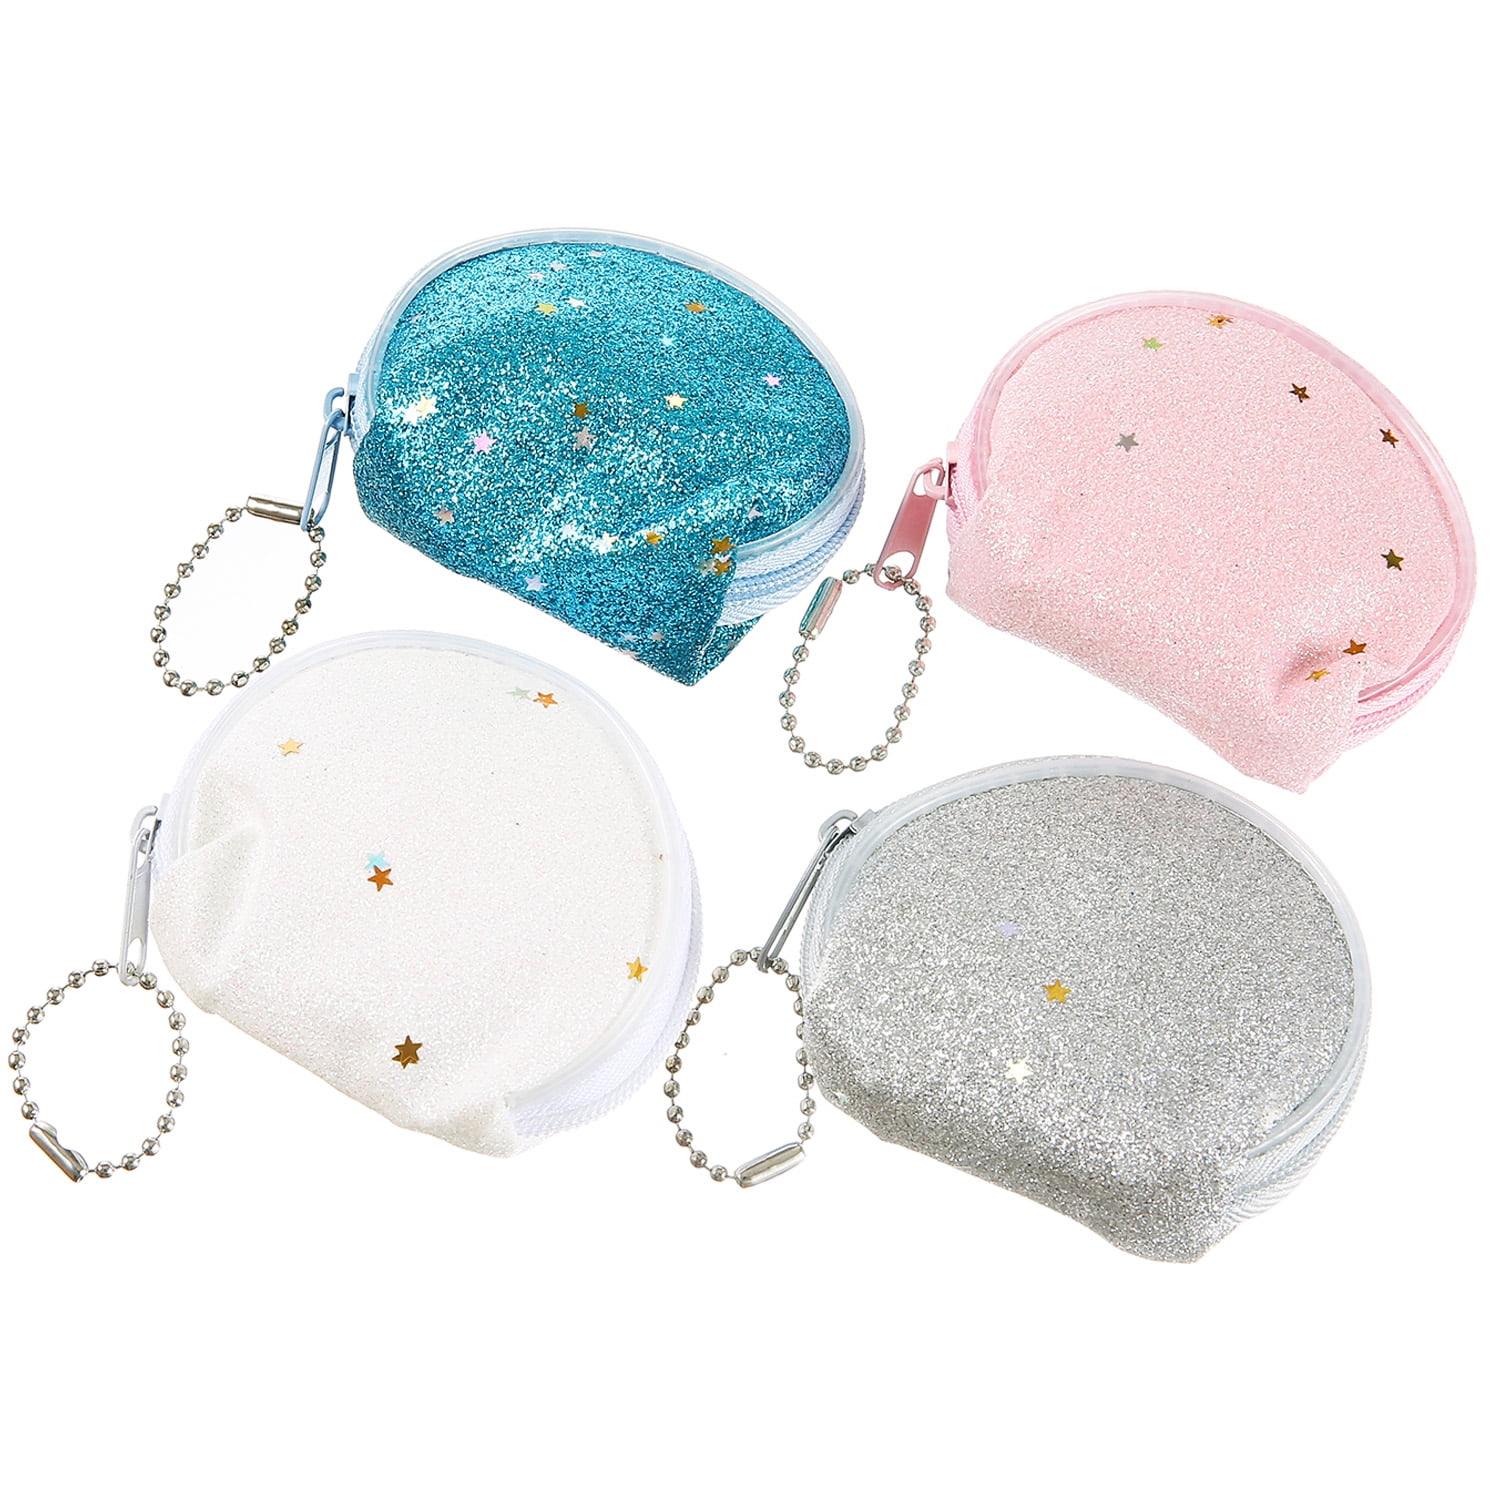 Colour Your Own Glitter Gloss Bag Girls Fashion Carry Handbag & Pens Toy Set 875 